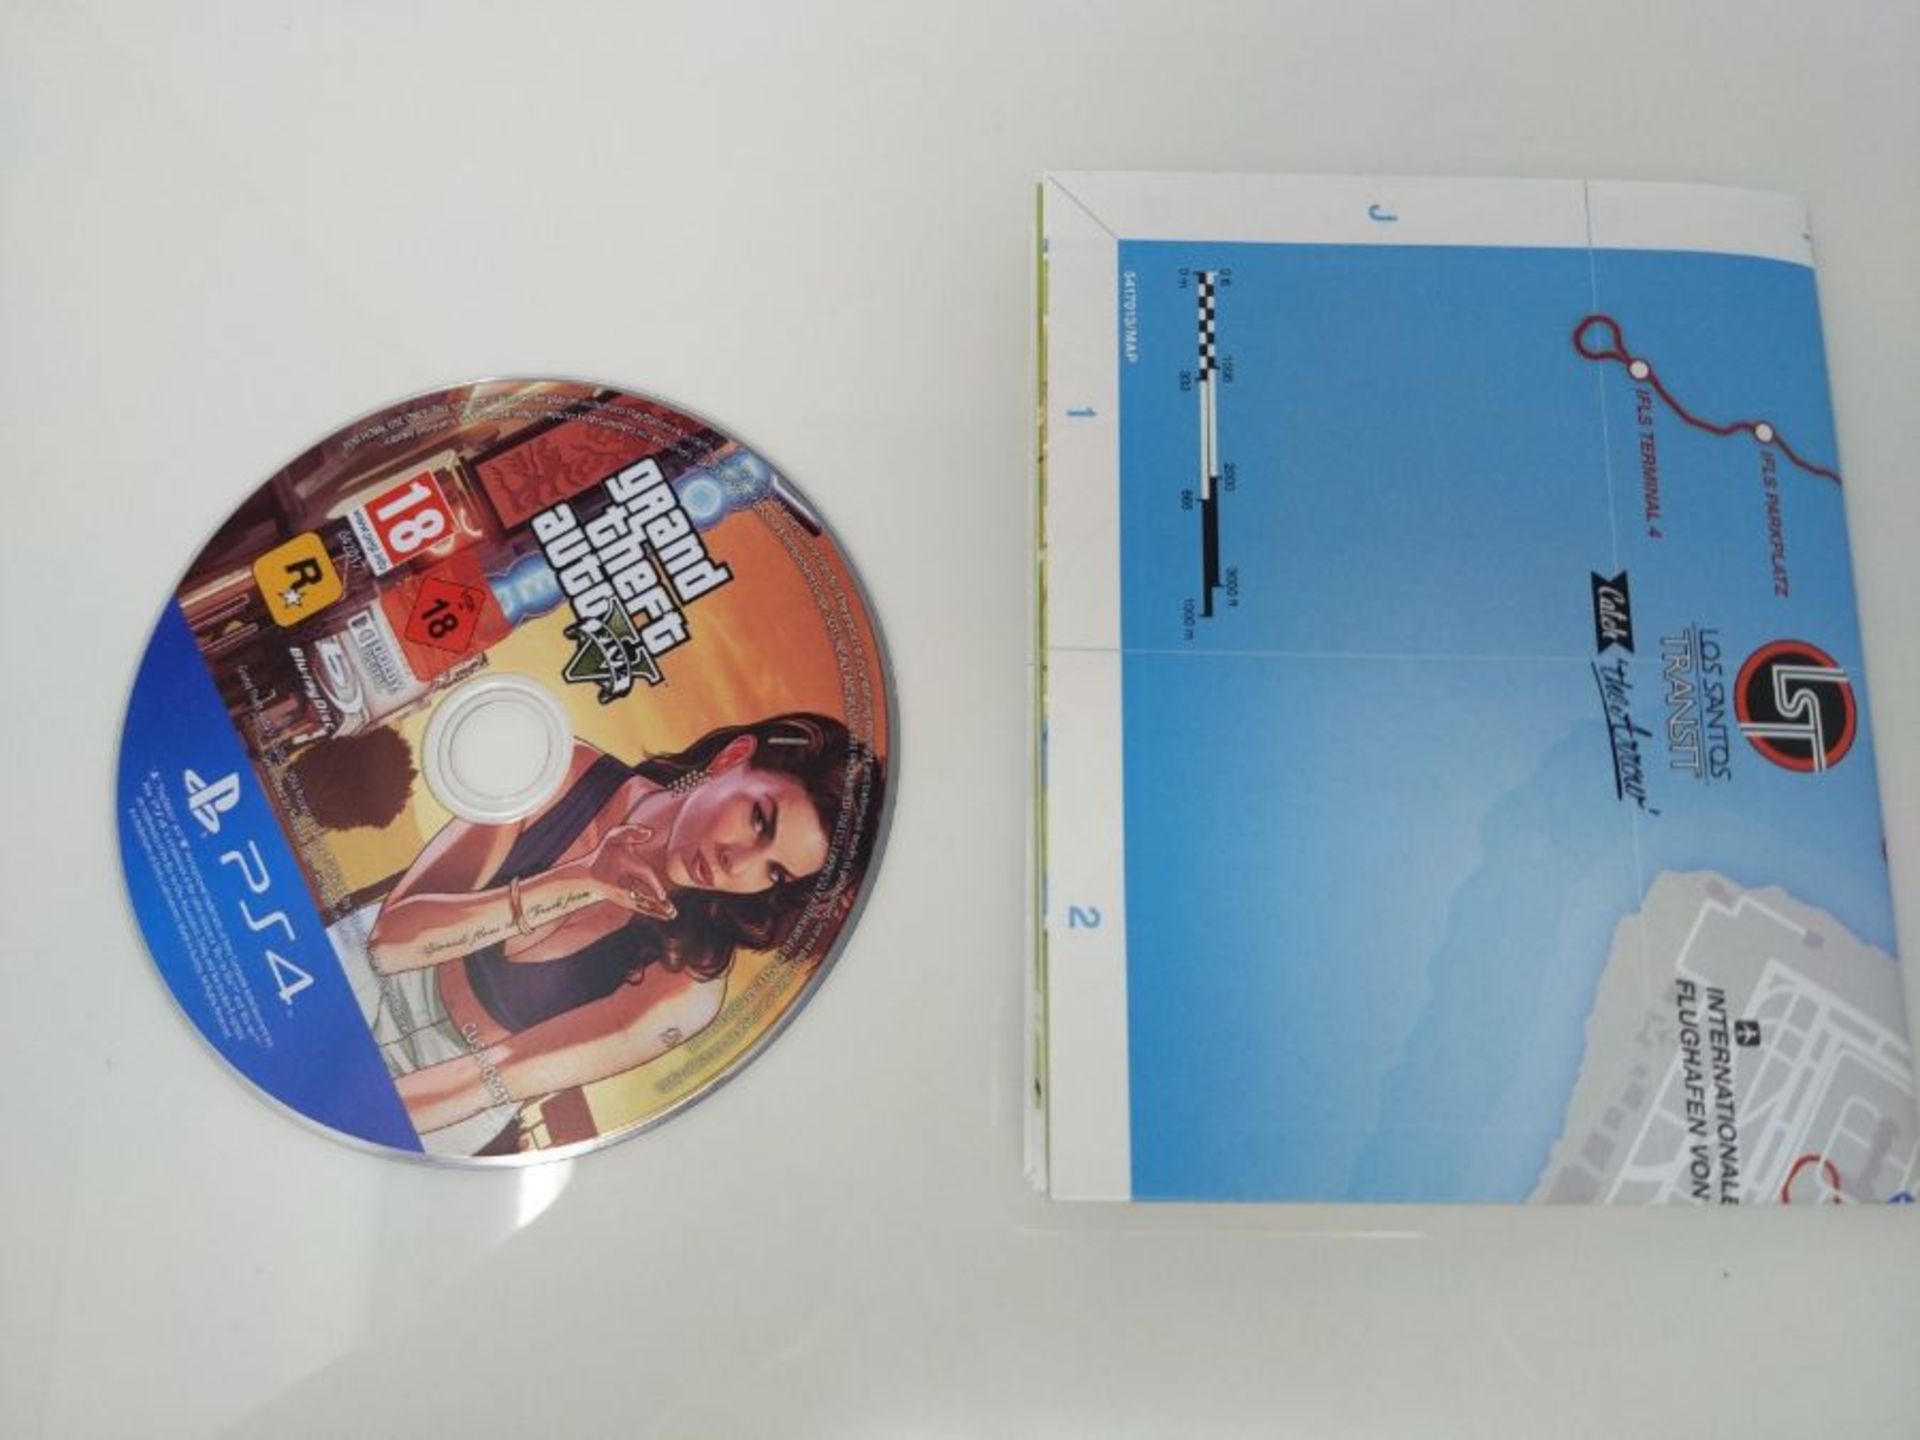 Grand Theft Auto V (Premium Edition) - Image 2 of 3